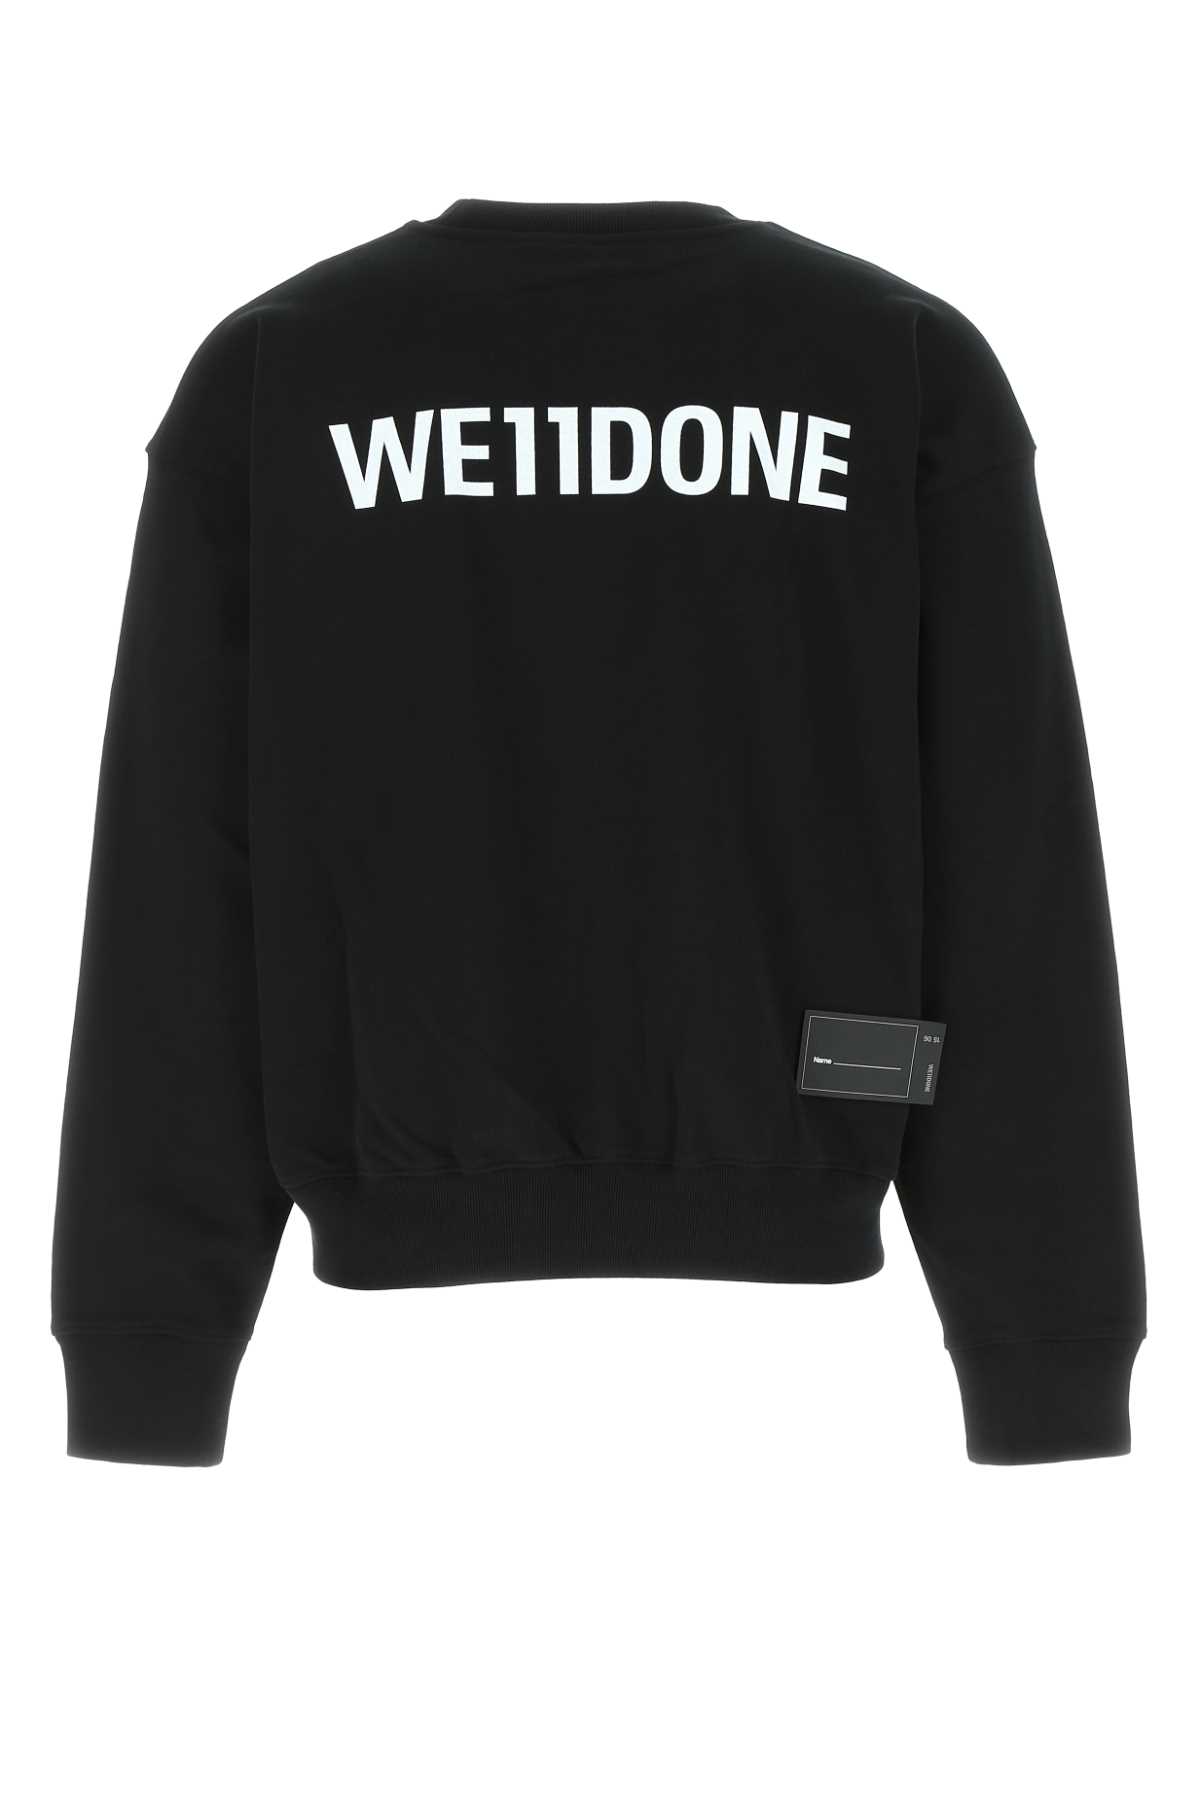 We11 Done Black Cotton Oversize Sweatshirt In Bk